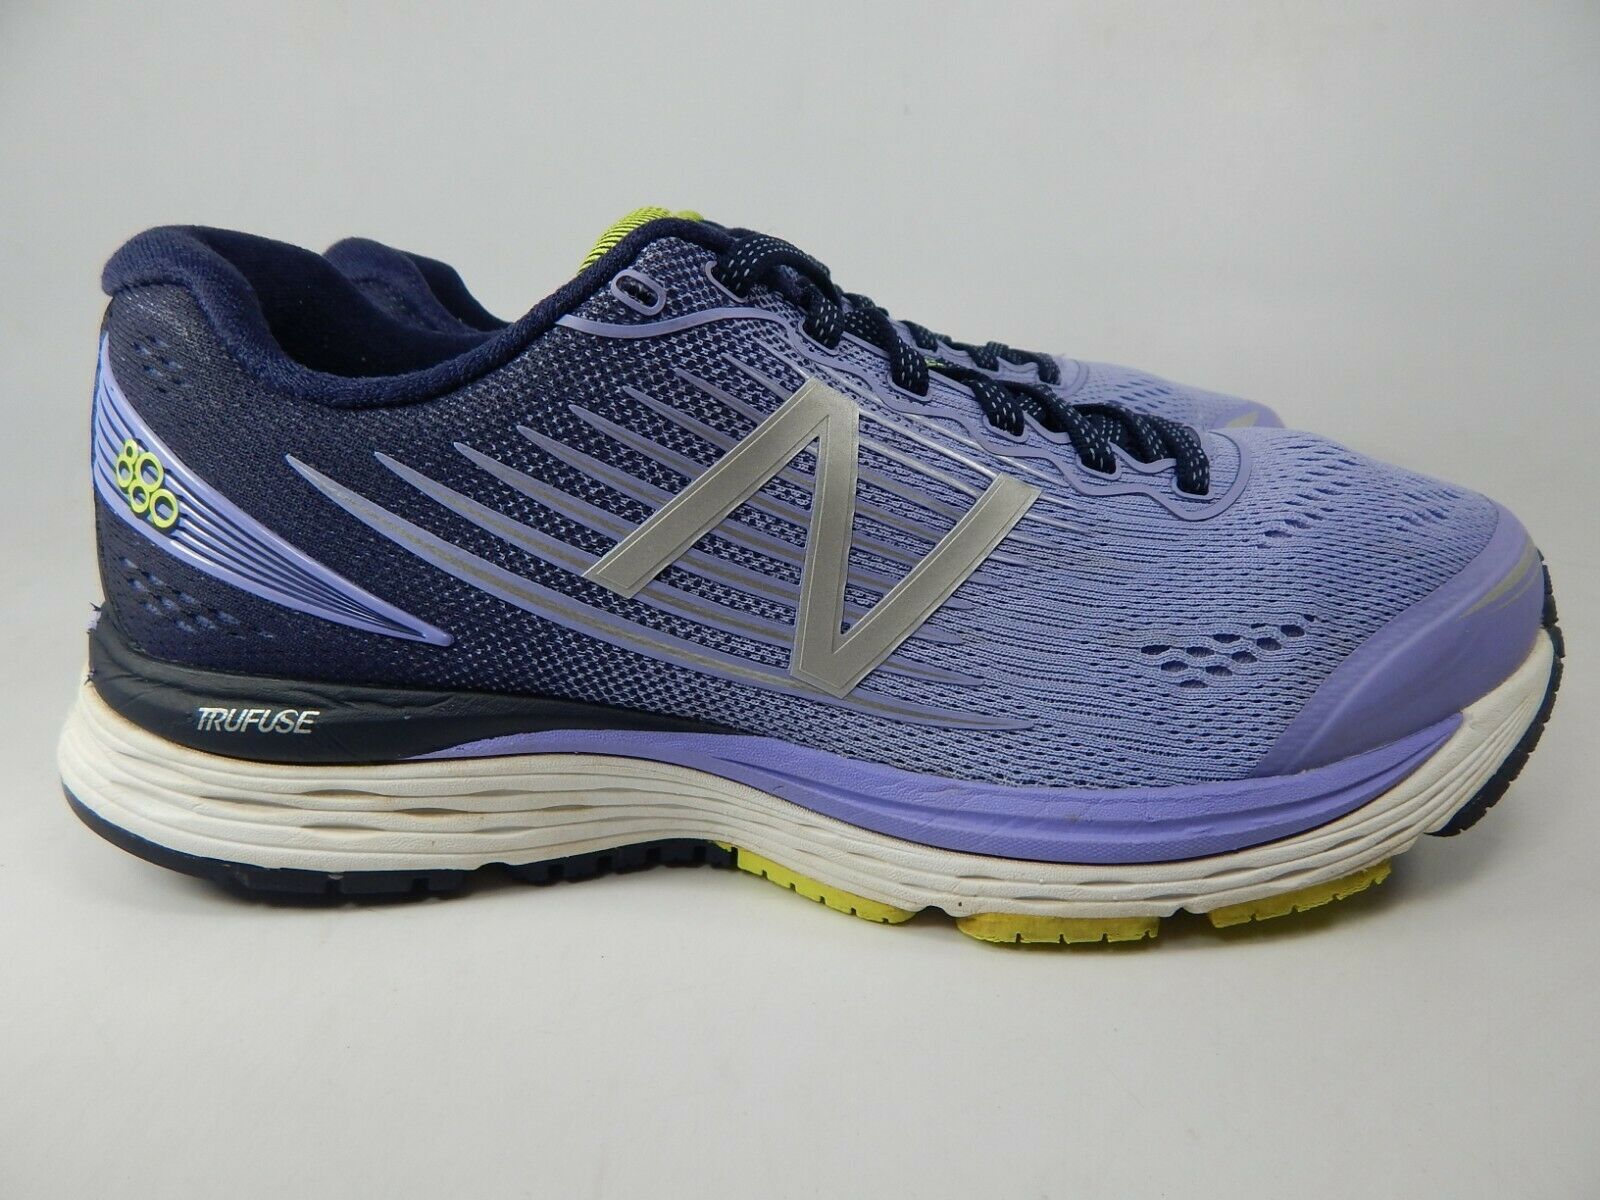 New Balance 880 v8 Size US 9.5 M (B) EU 41 Women's Running Shoes Purple ...